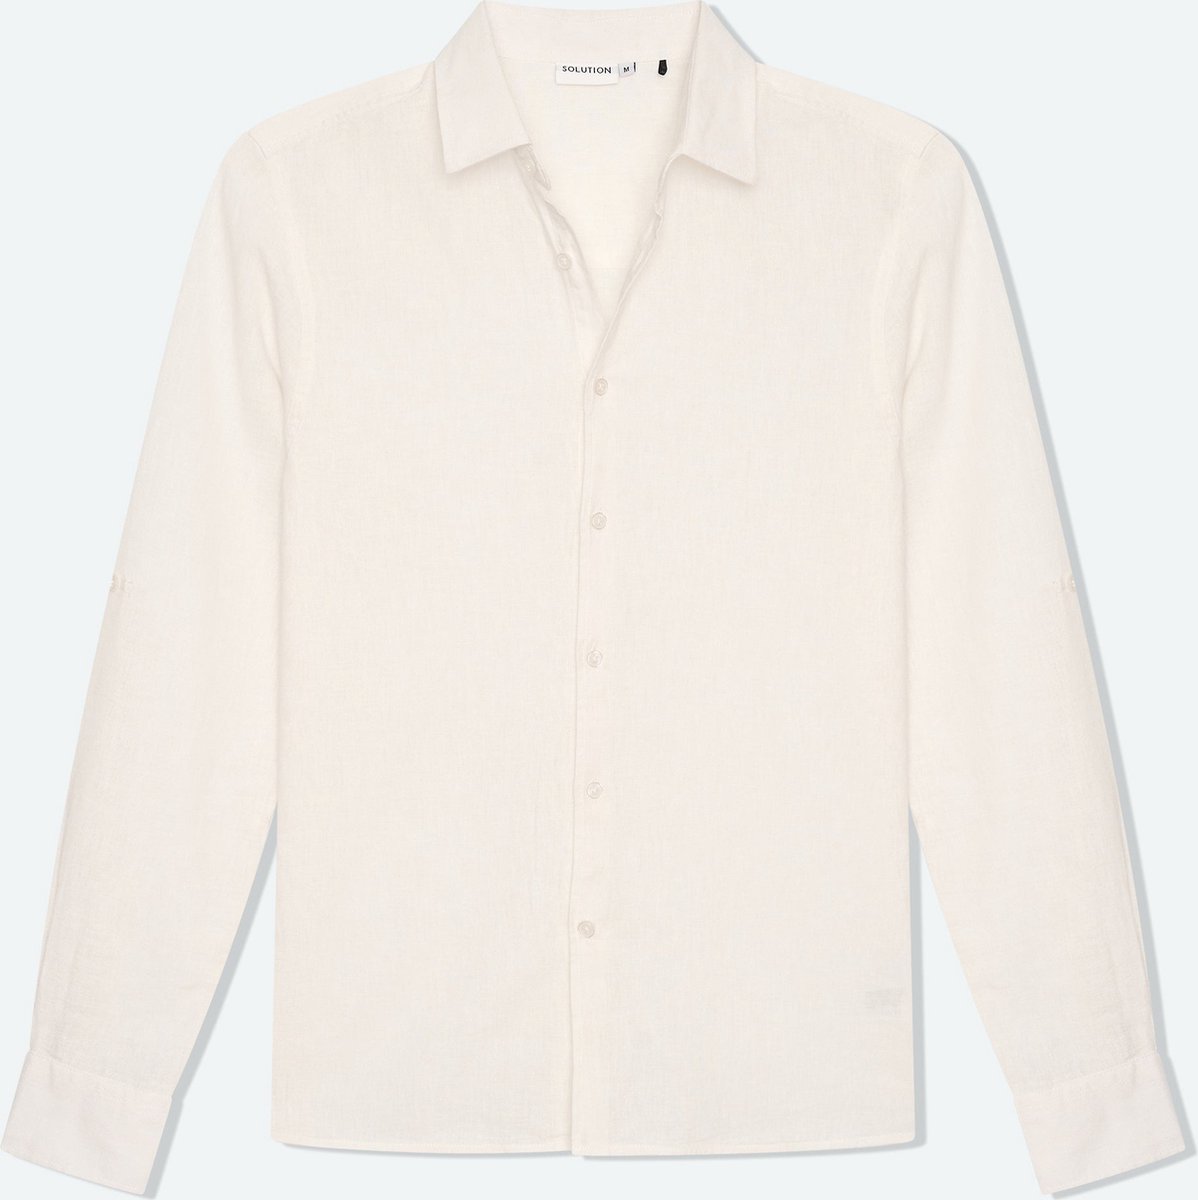 Solution Clothing Lean - Casual Overhemd - Shirt - Lange Mouwen - Regular Fit - Volwassenen - Heren - Mannen - Wit - M - M - Solution Clothing